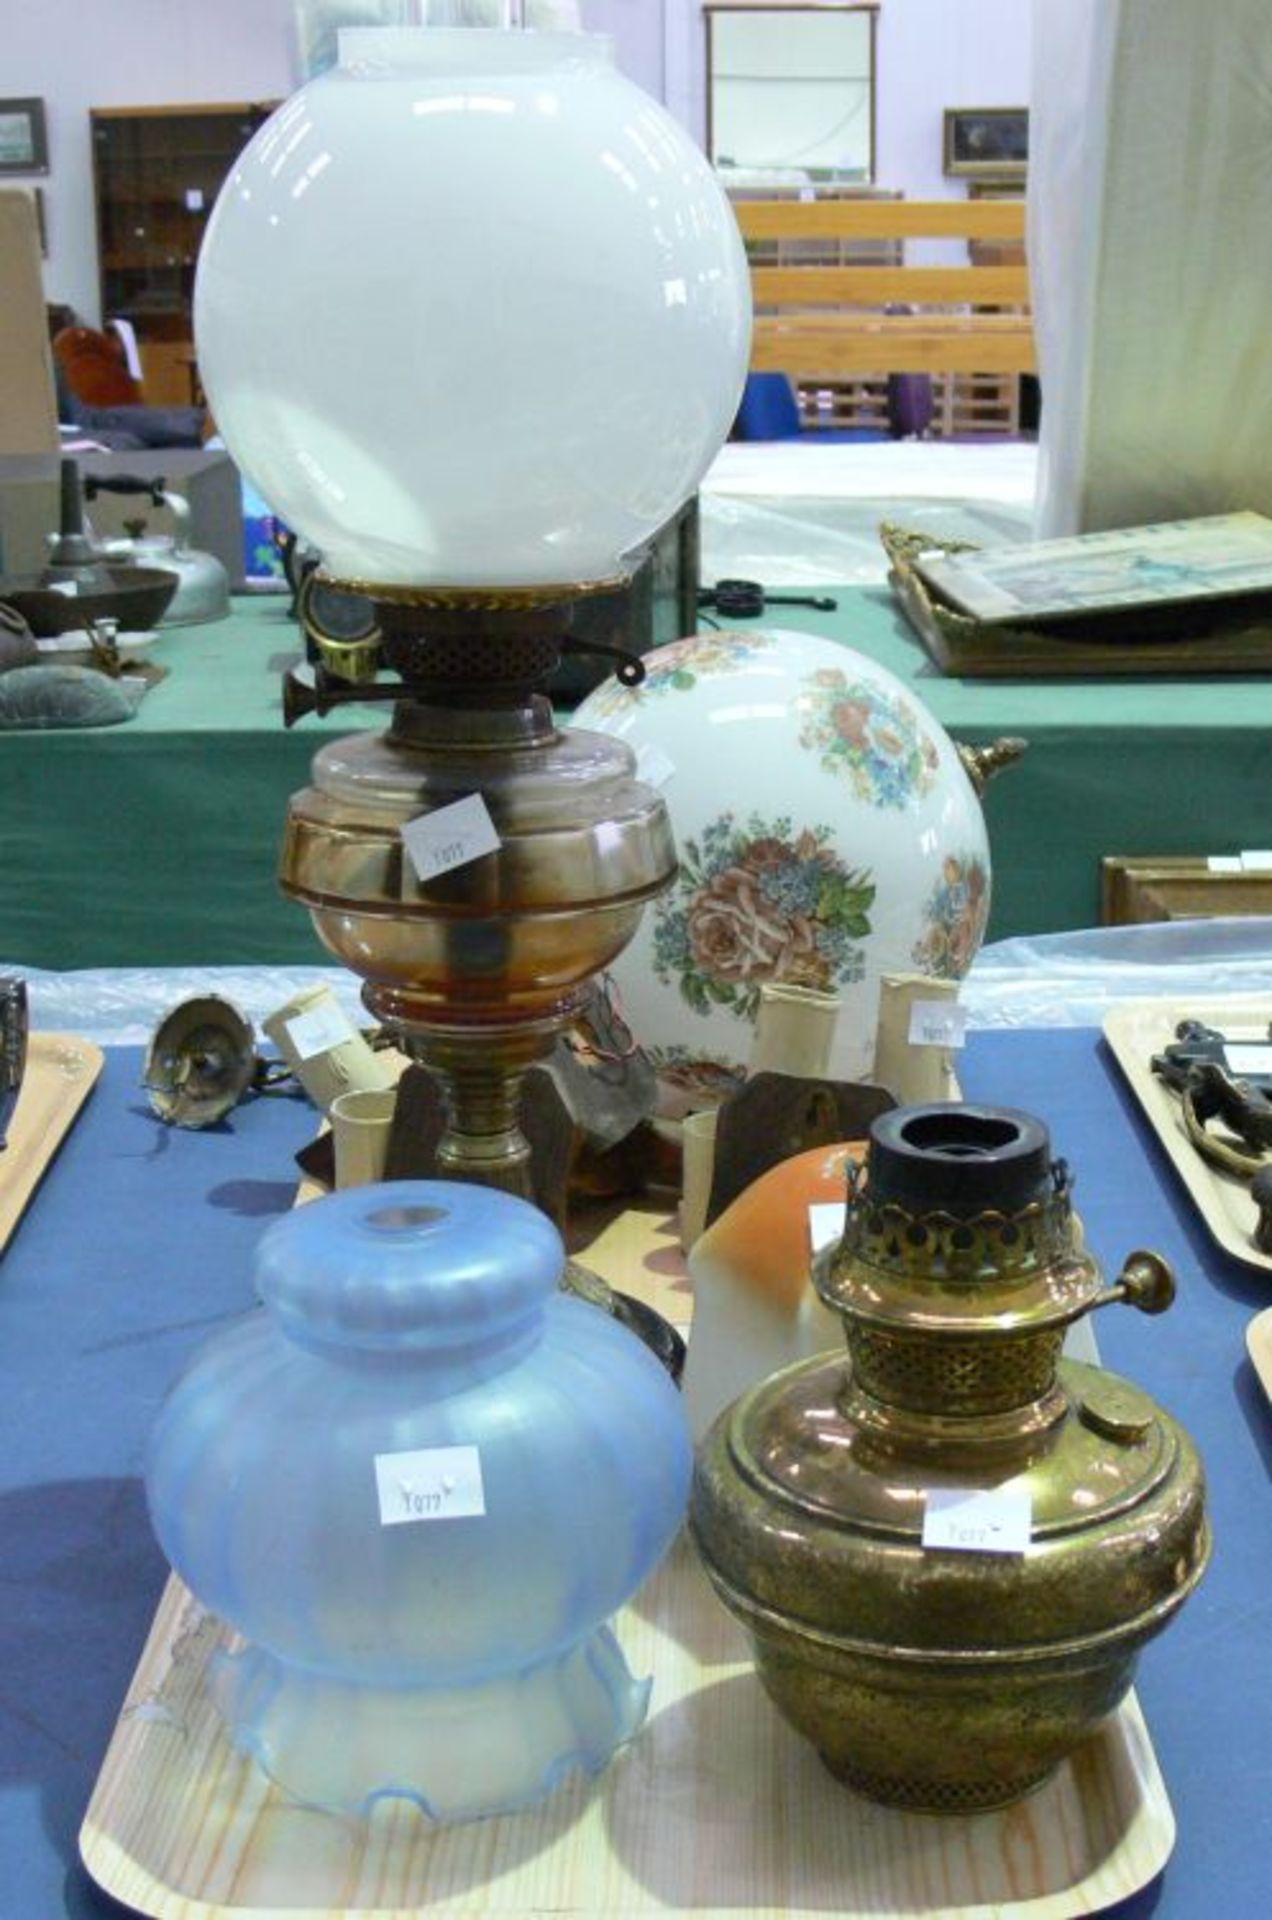 Decorated Globe Light Fitting, Oil Lamps etc (est. £15-£25)